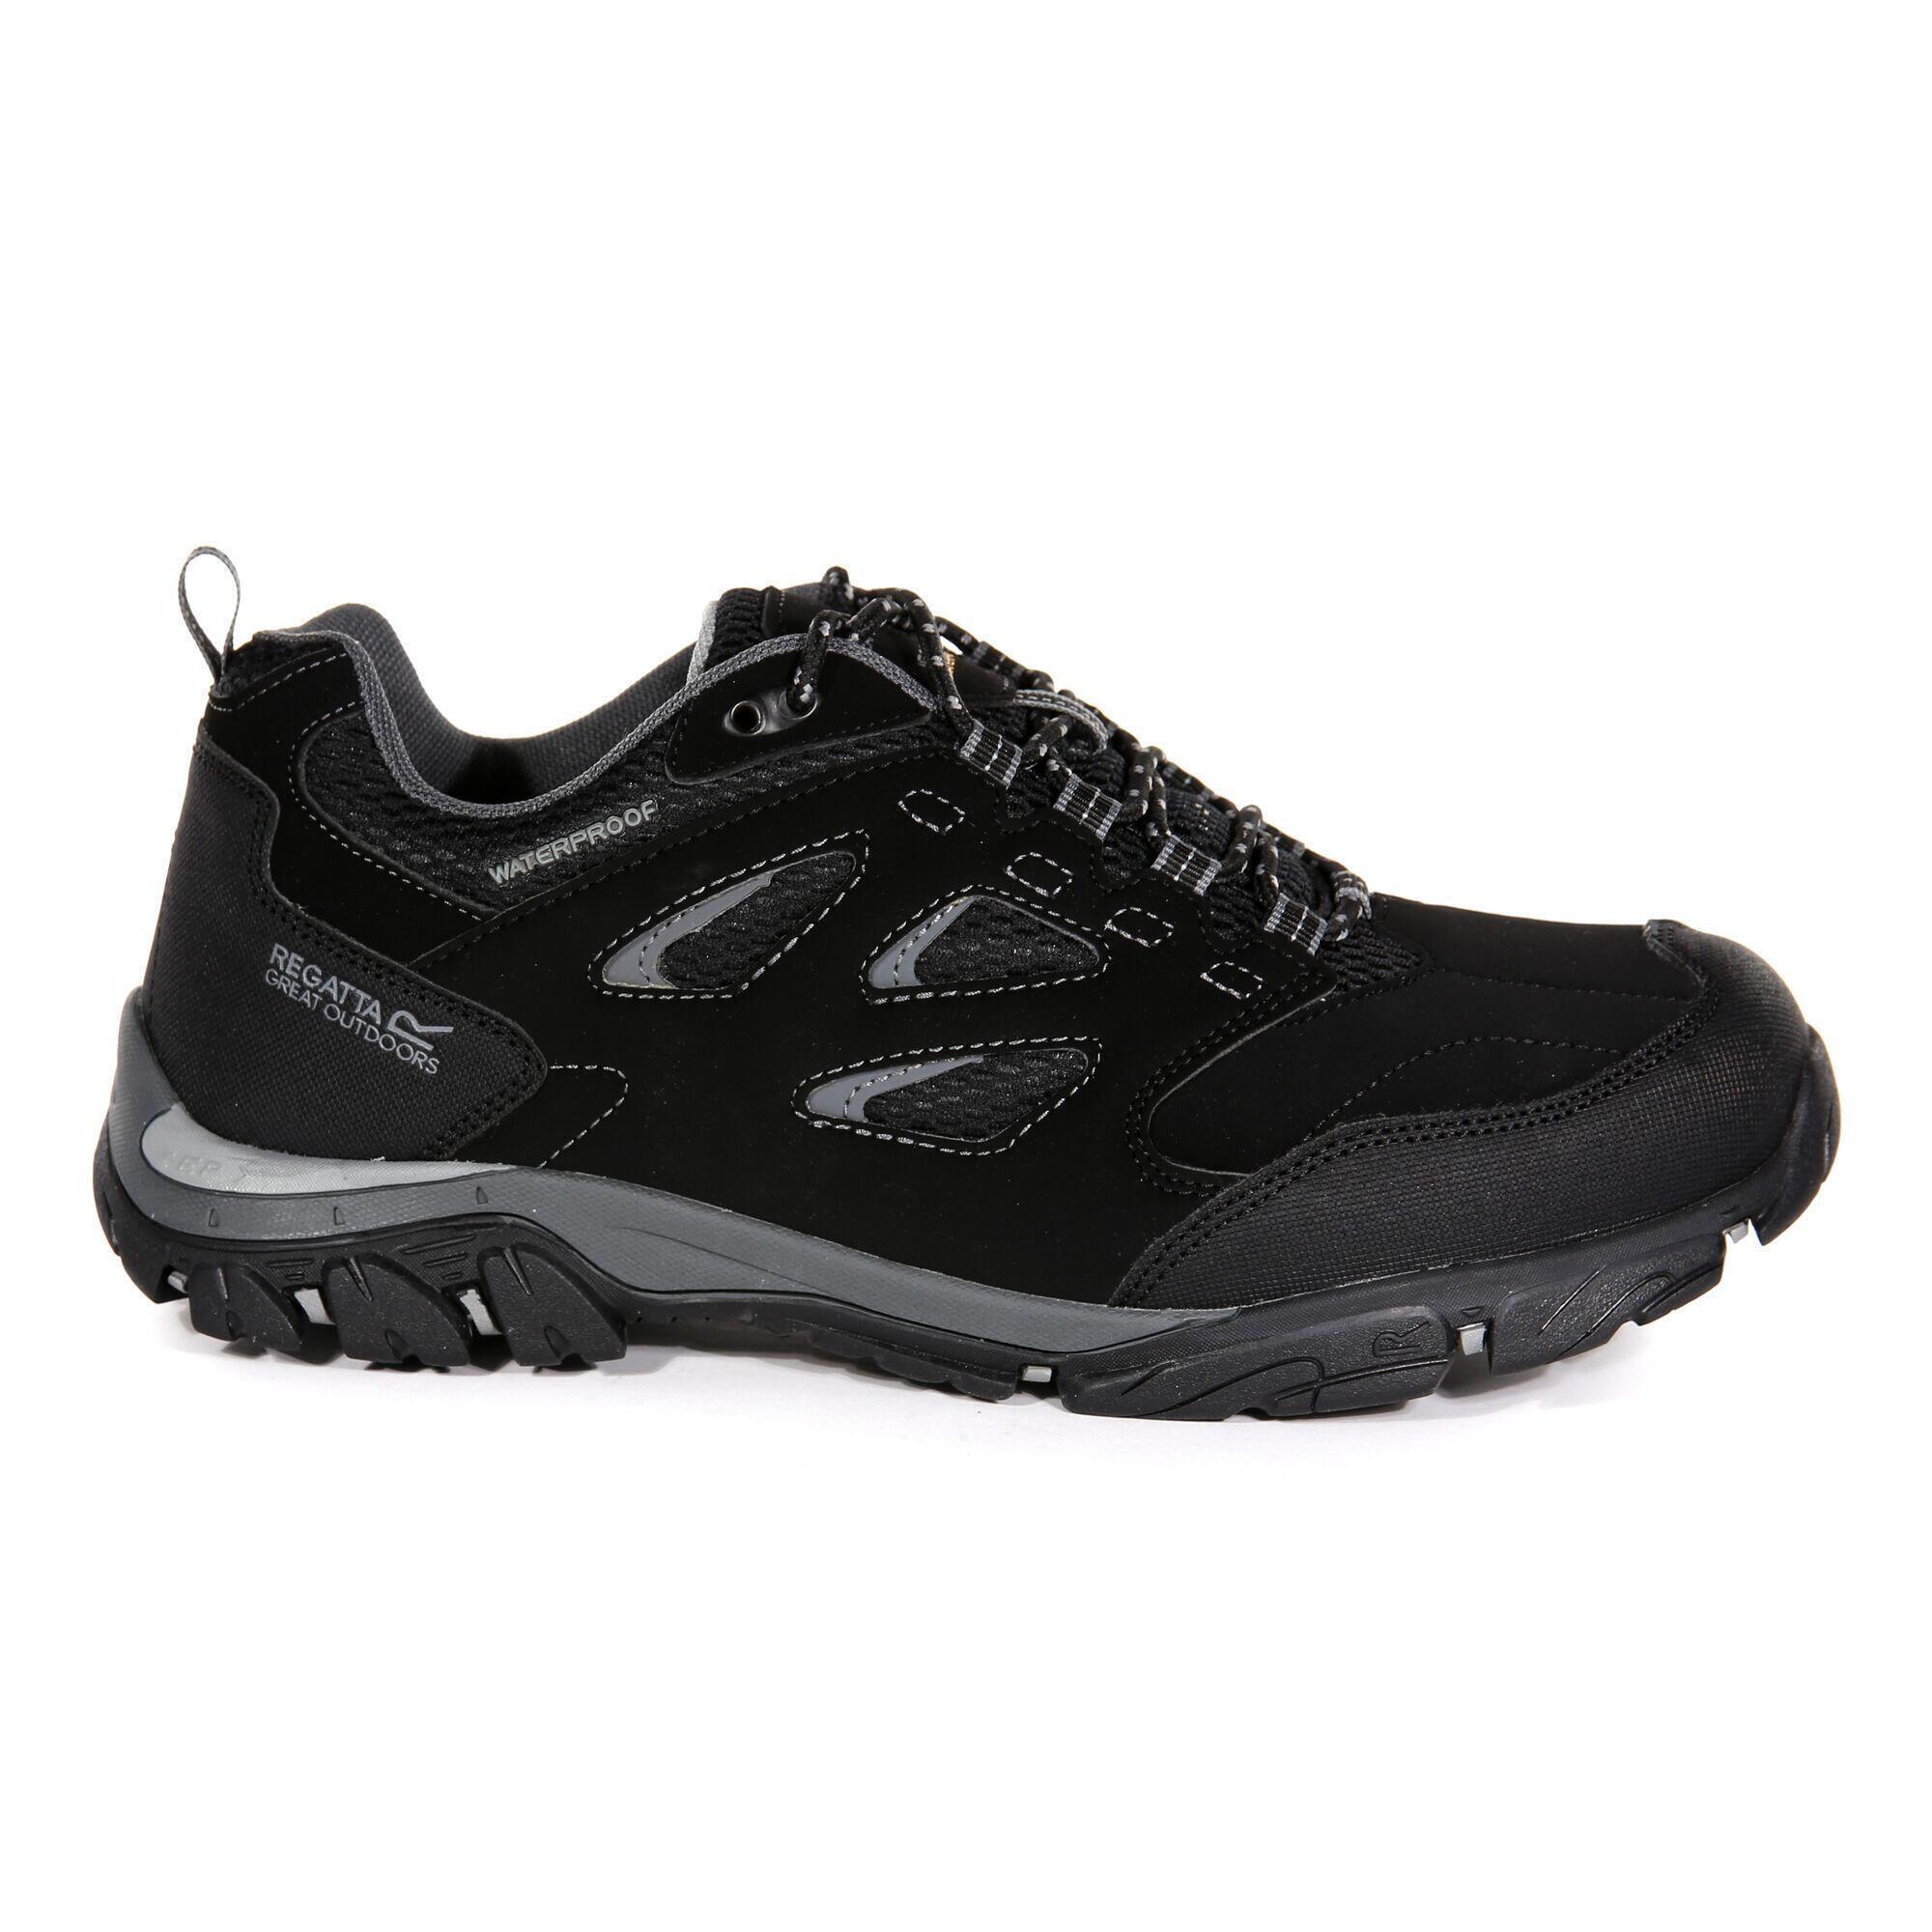 REGATTA Holcombe IEP Low Men's Hiking Boots - Black Granite